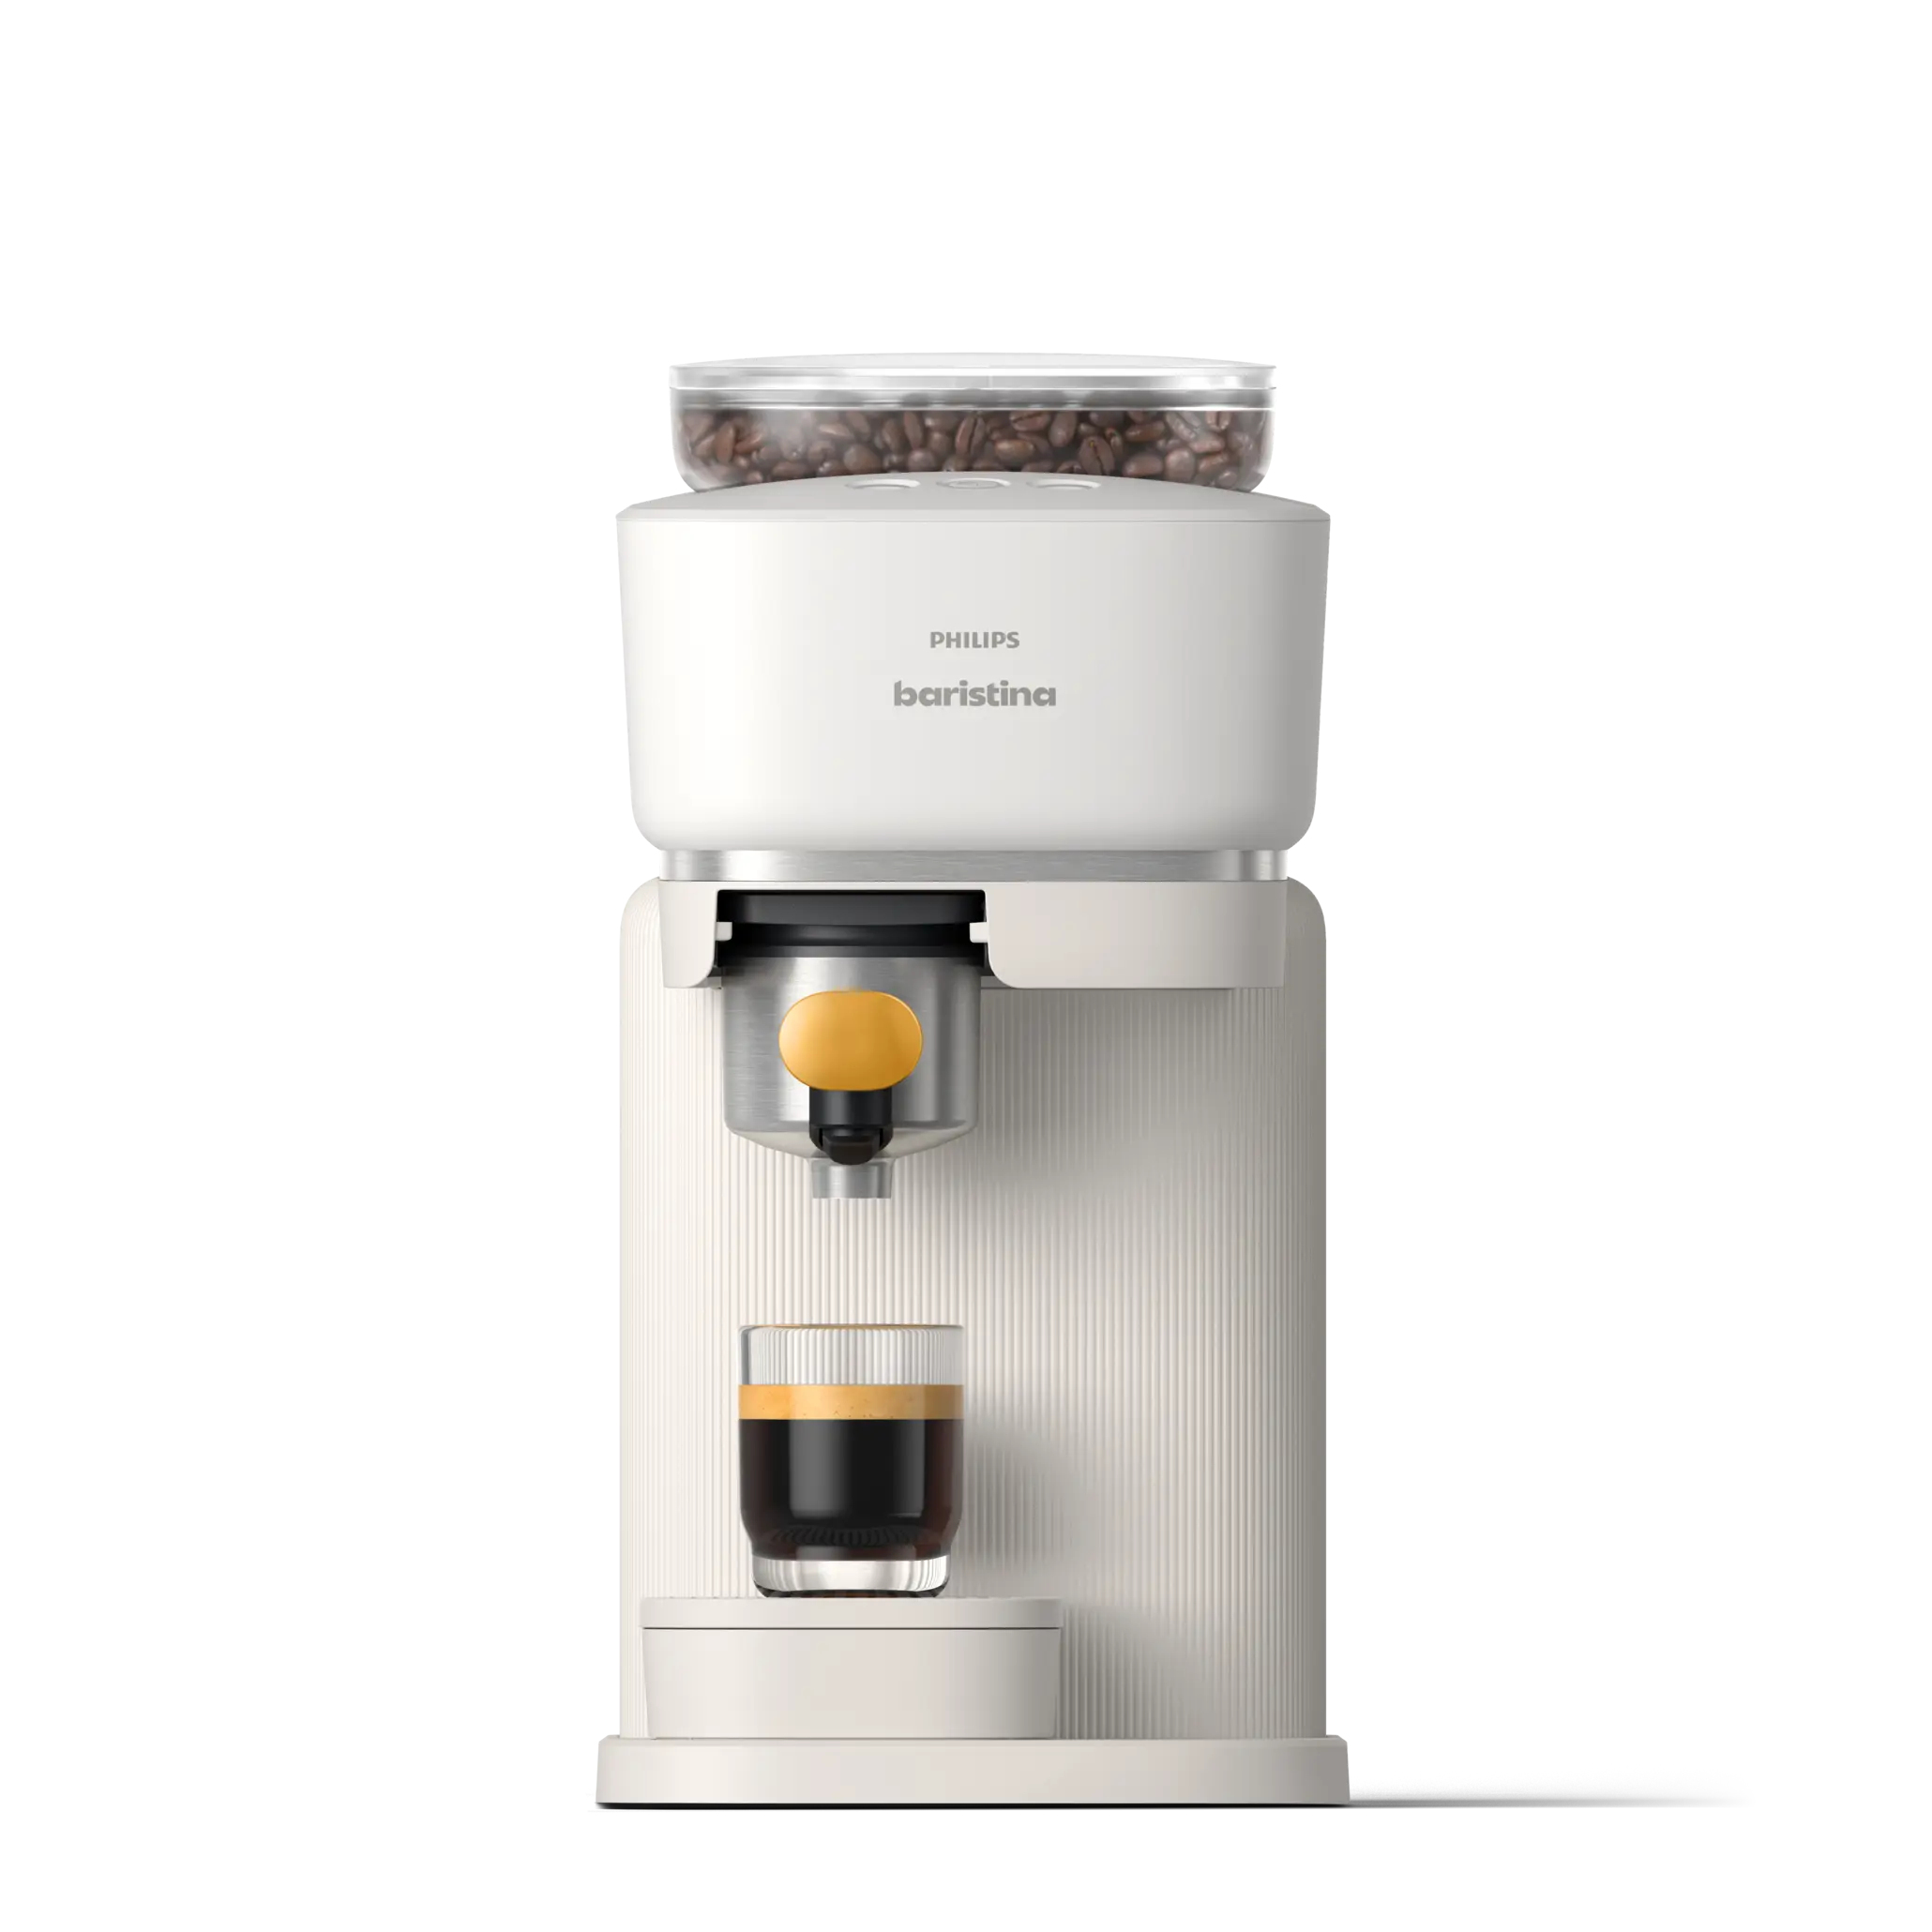 Philips BAR301/03 coffee maker